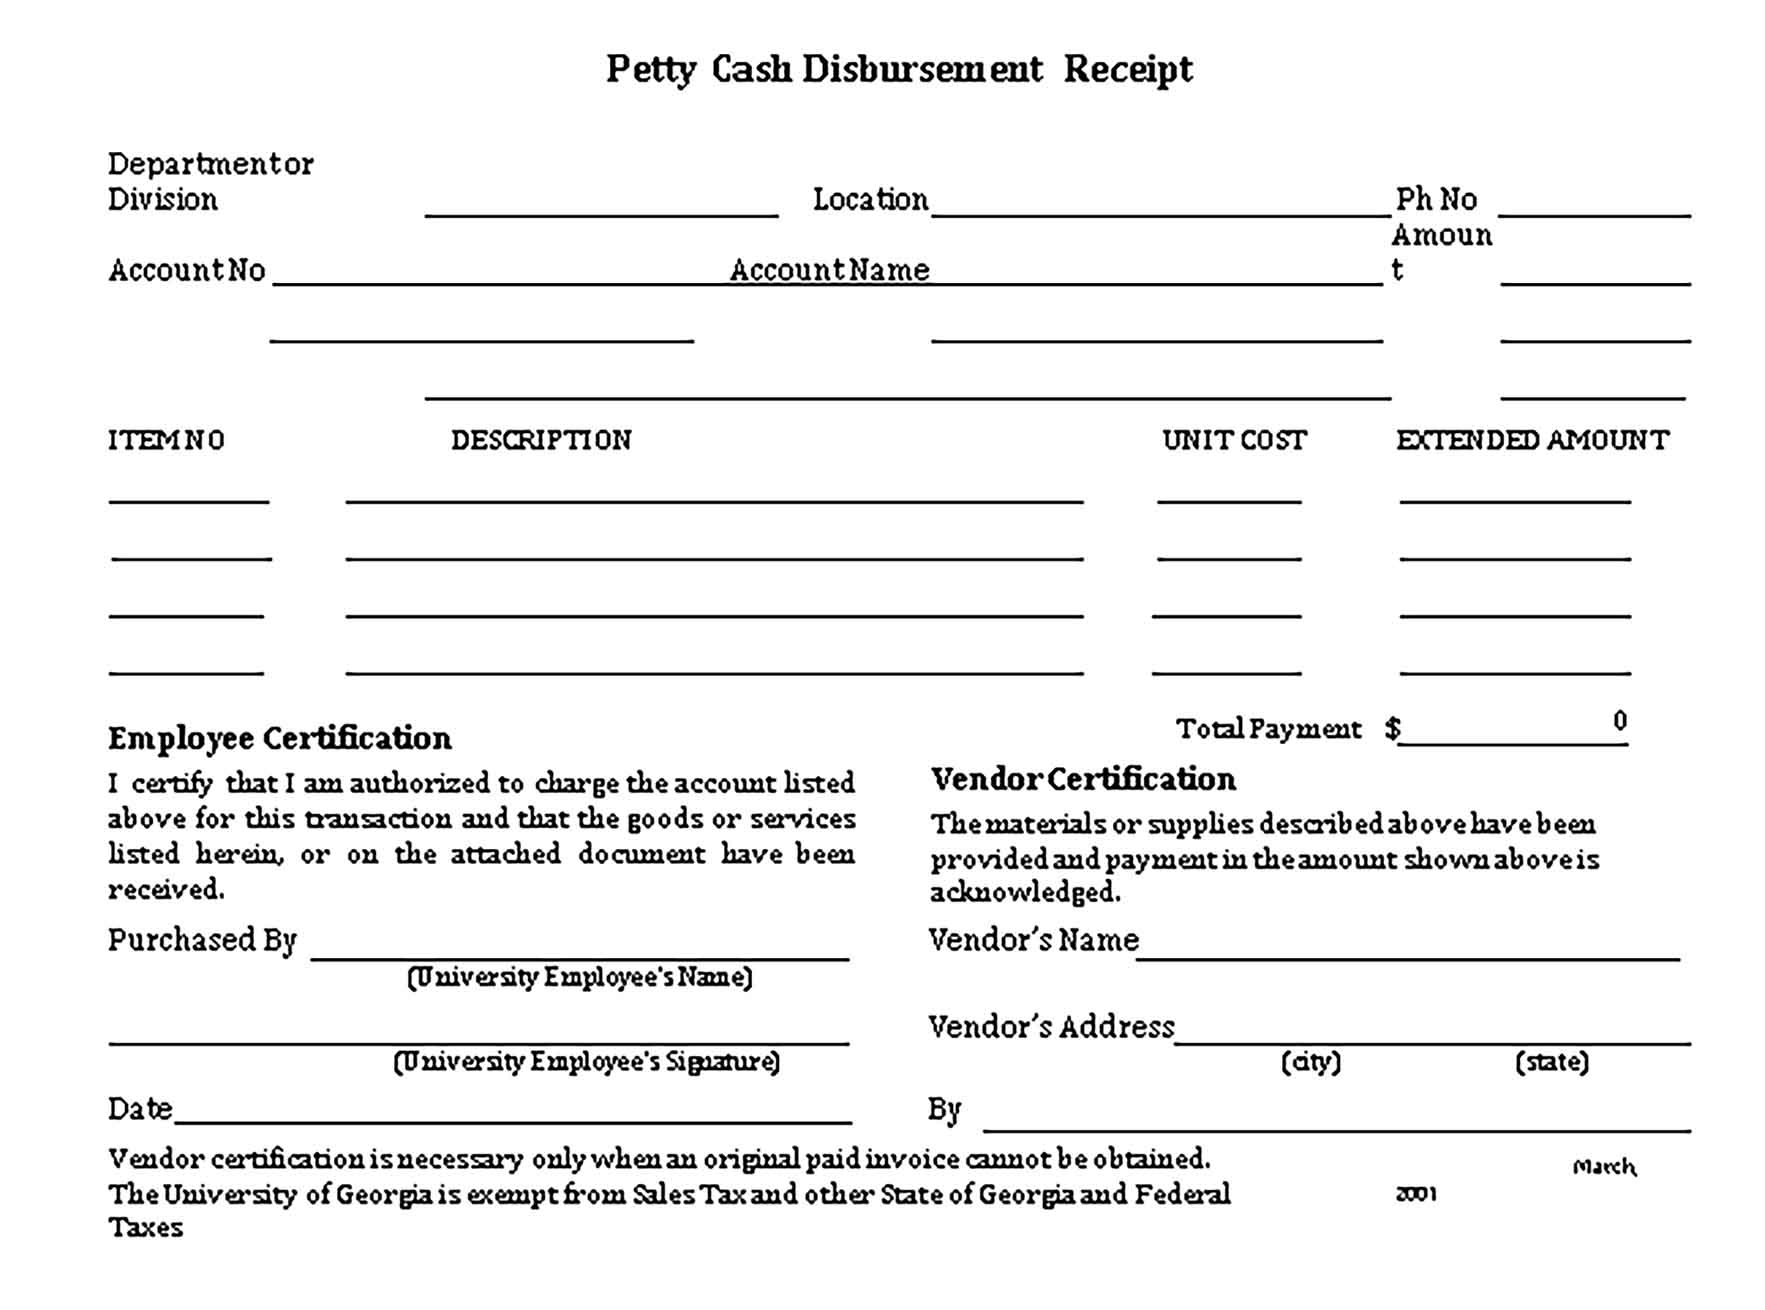 Sample Petty Cash Disbursement Receipt Templates